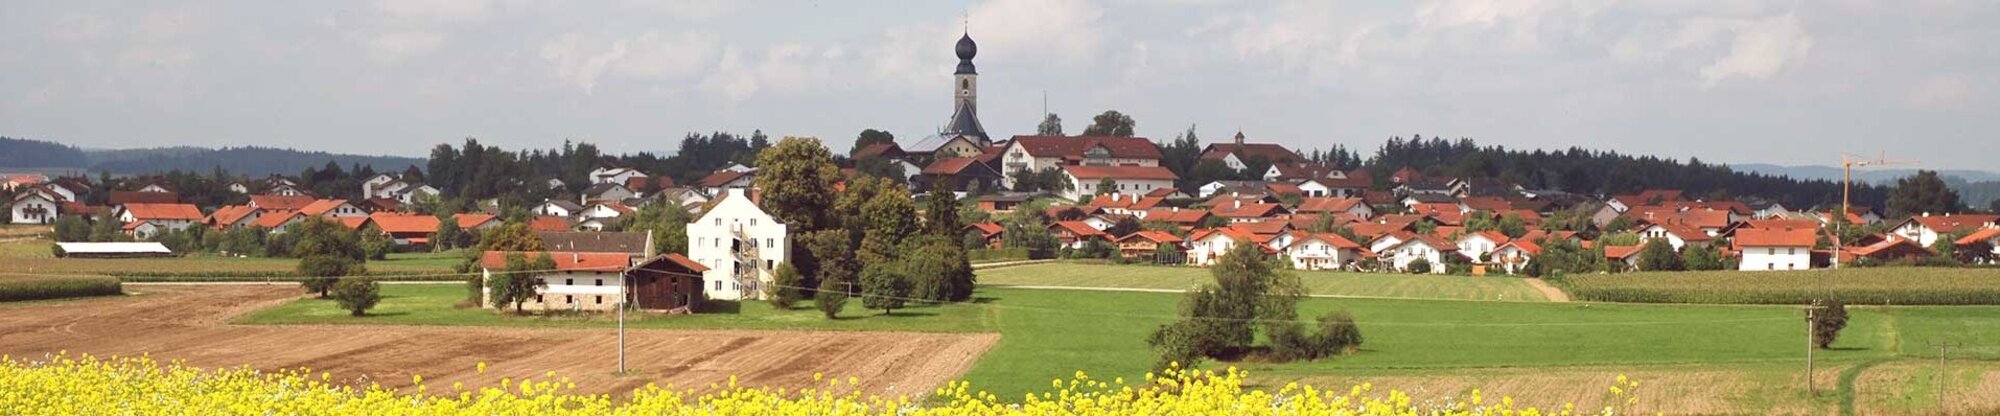 Gemeinde Engelsberg